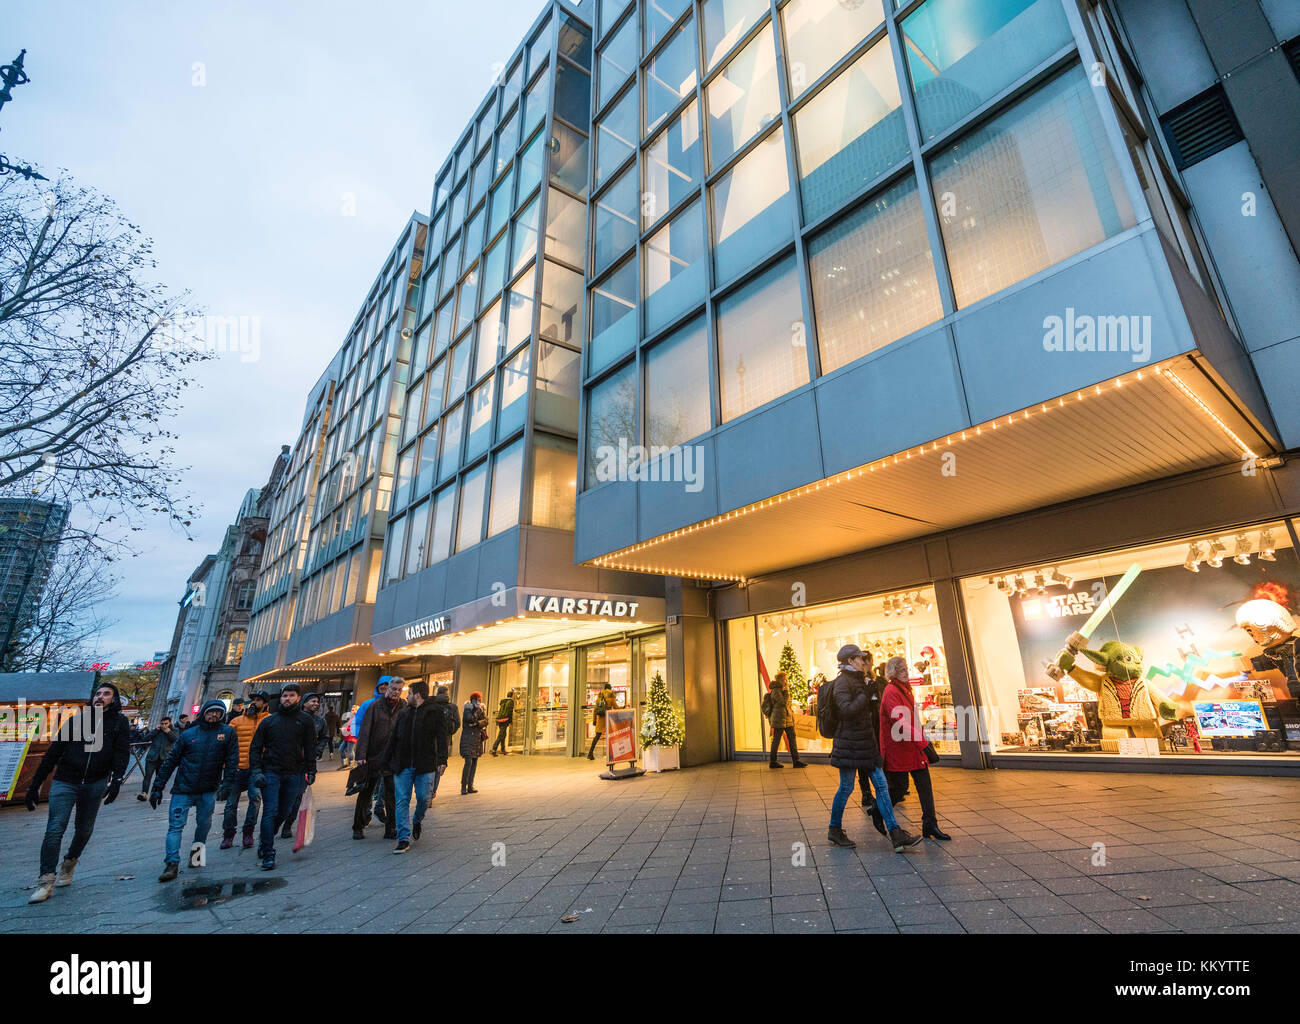 Berlin kurfurstendamm shopping hi-res stock photography and images - Alamy